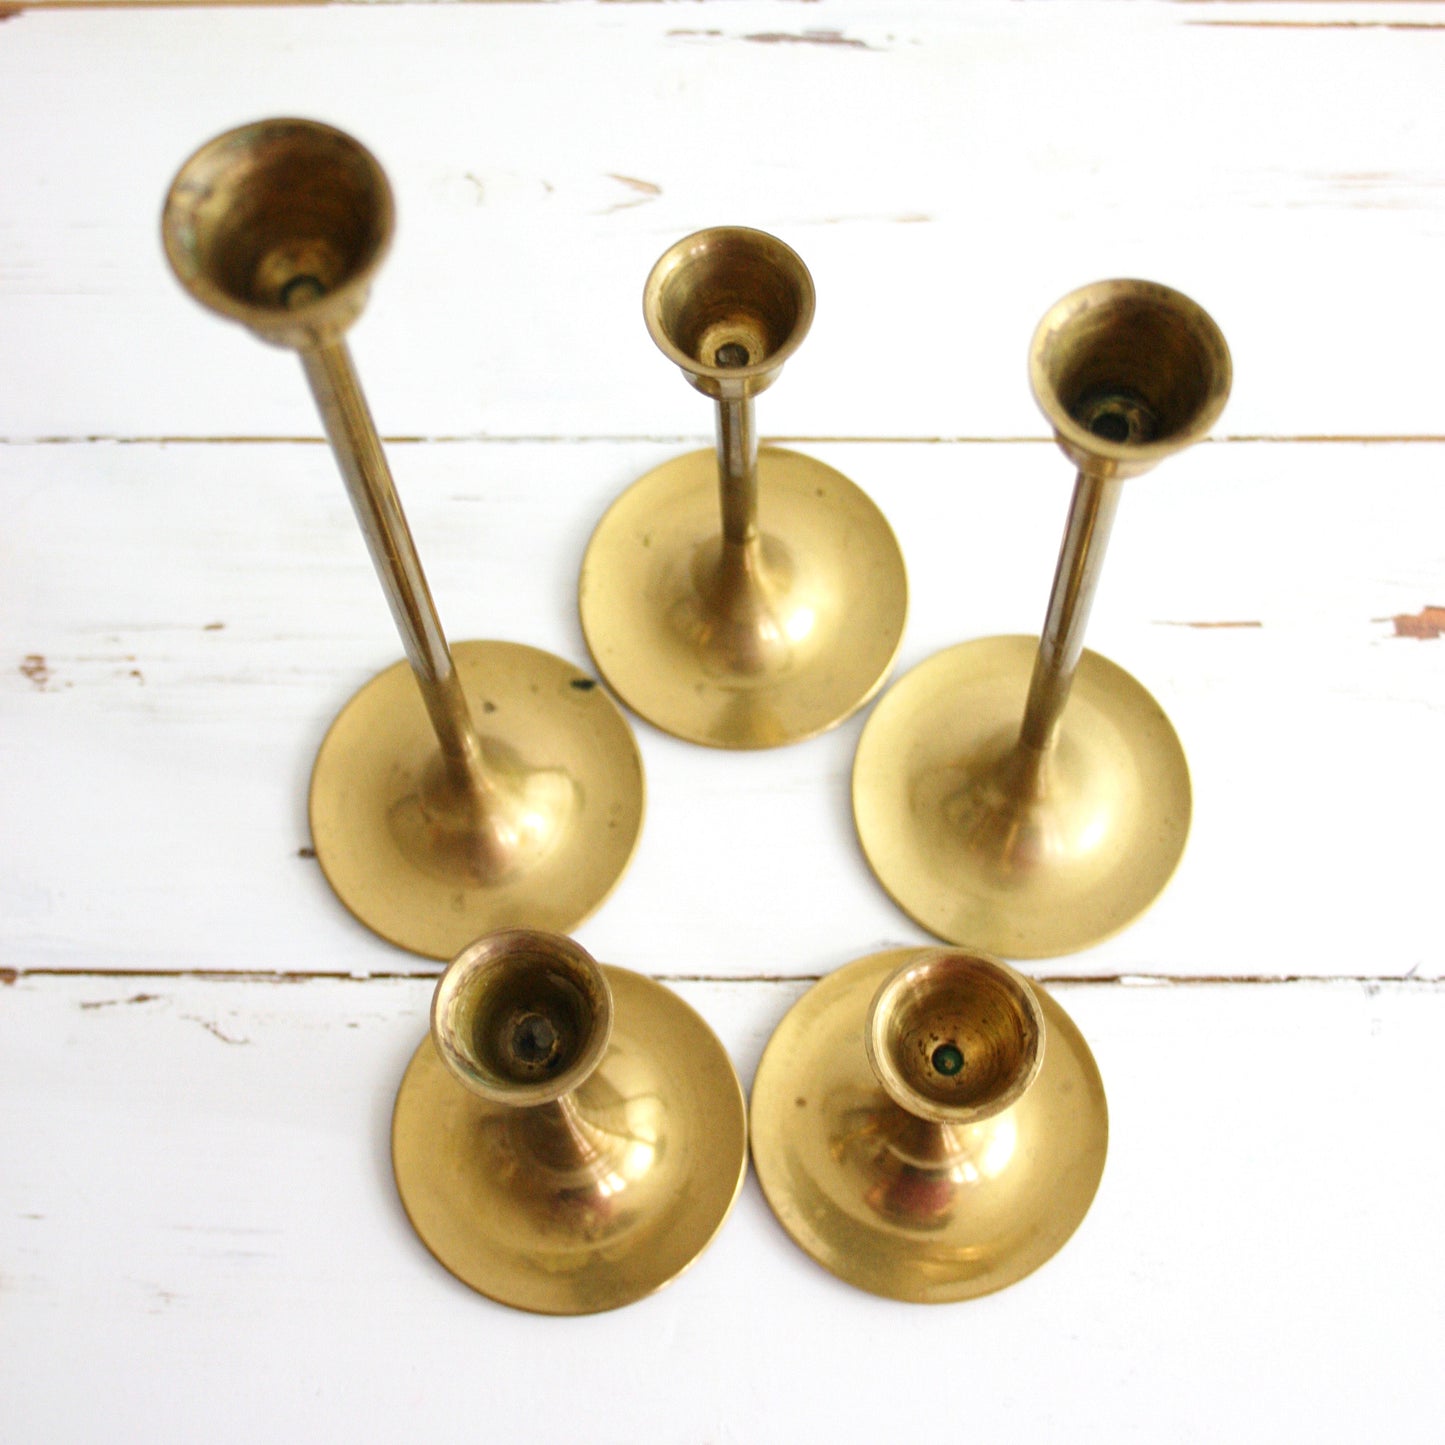 SOLD - Vintage Graduated Brass Candlesticks / Set of Five Mid Century Modern Brass Candlesticks